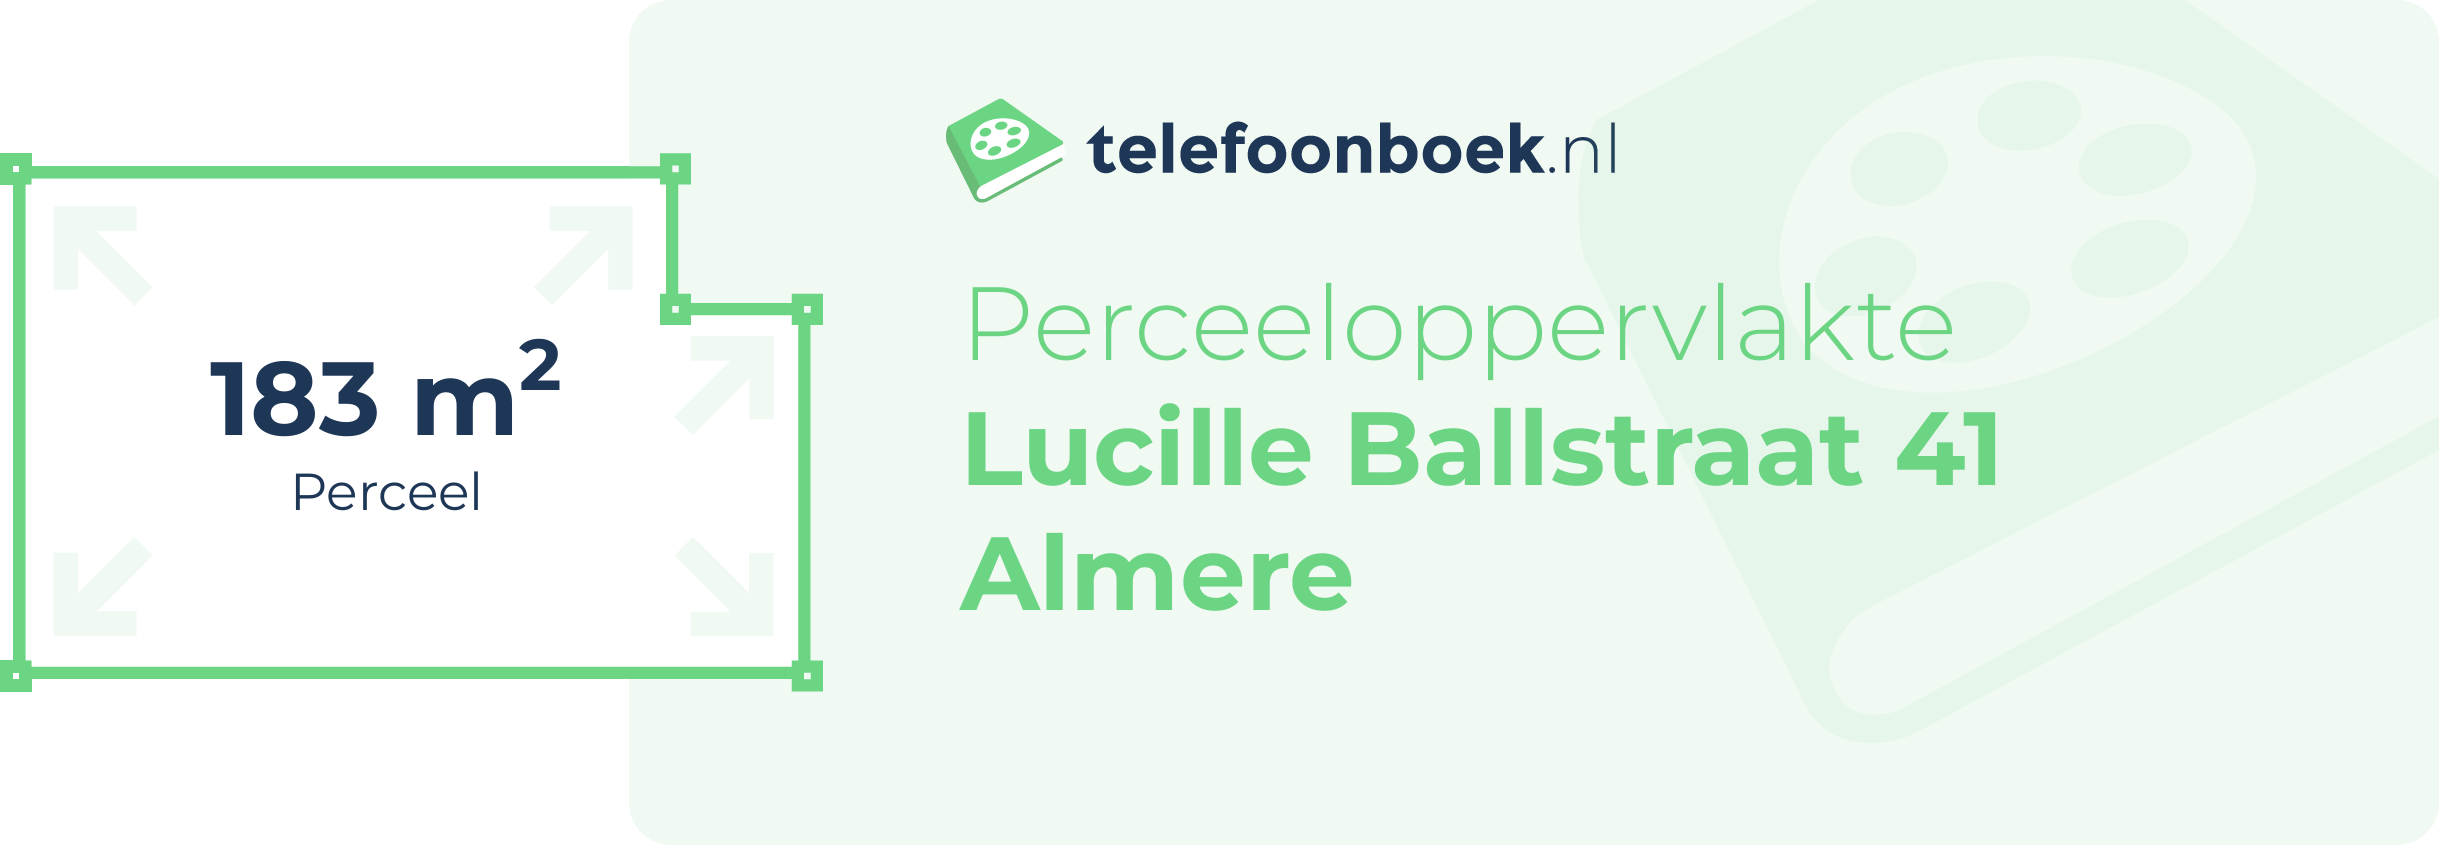 Perceeloppervlakte Lucille Ballstraat 41 Almere